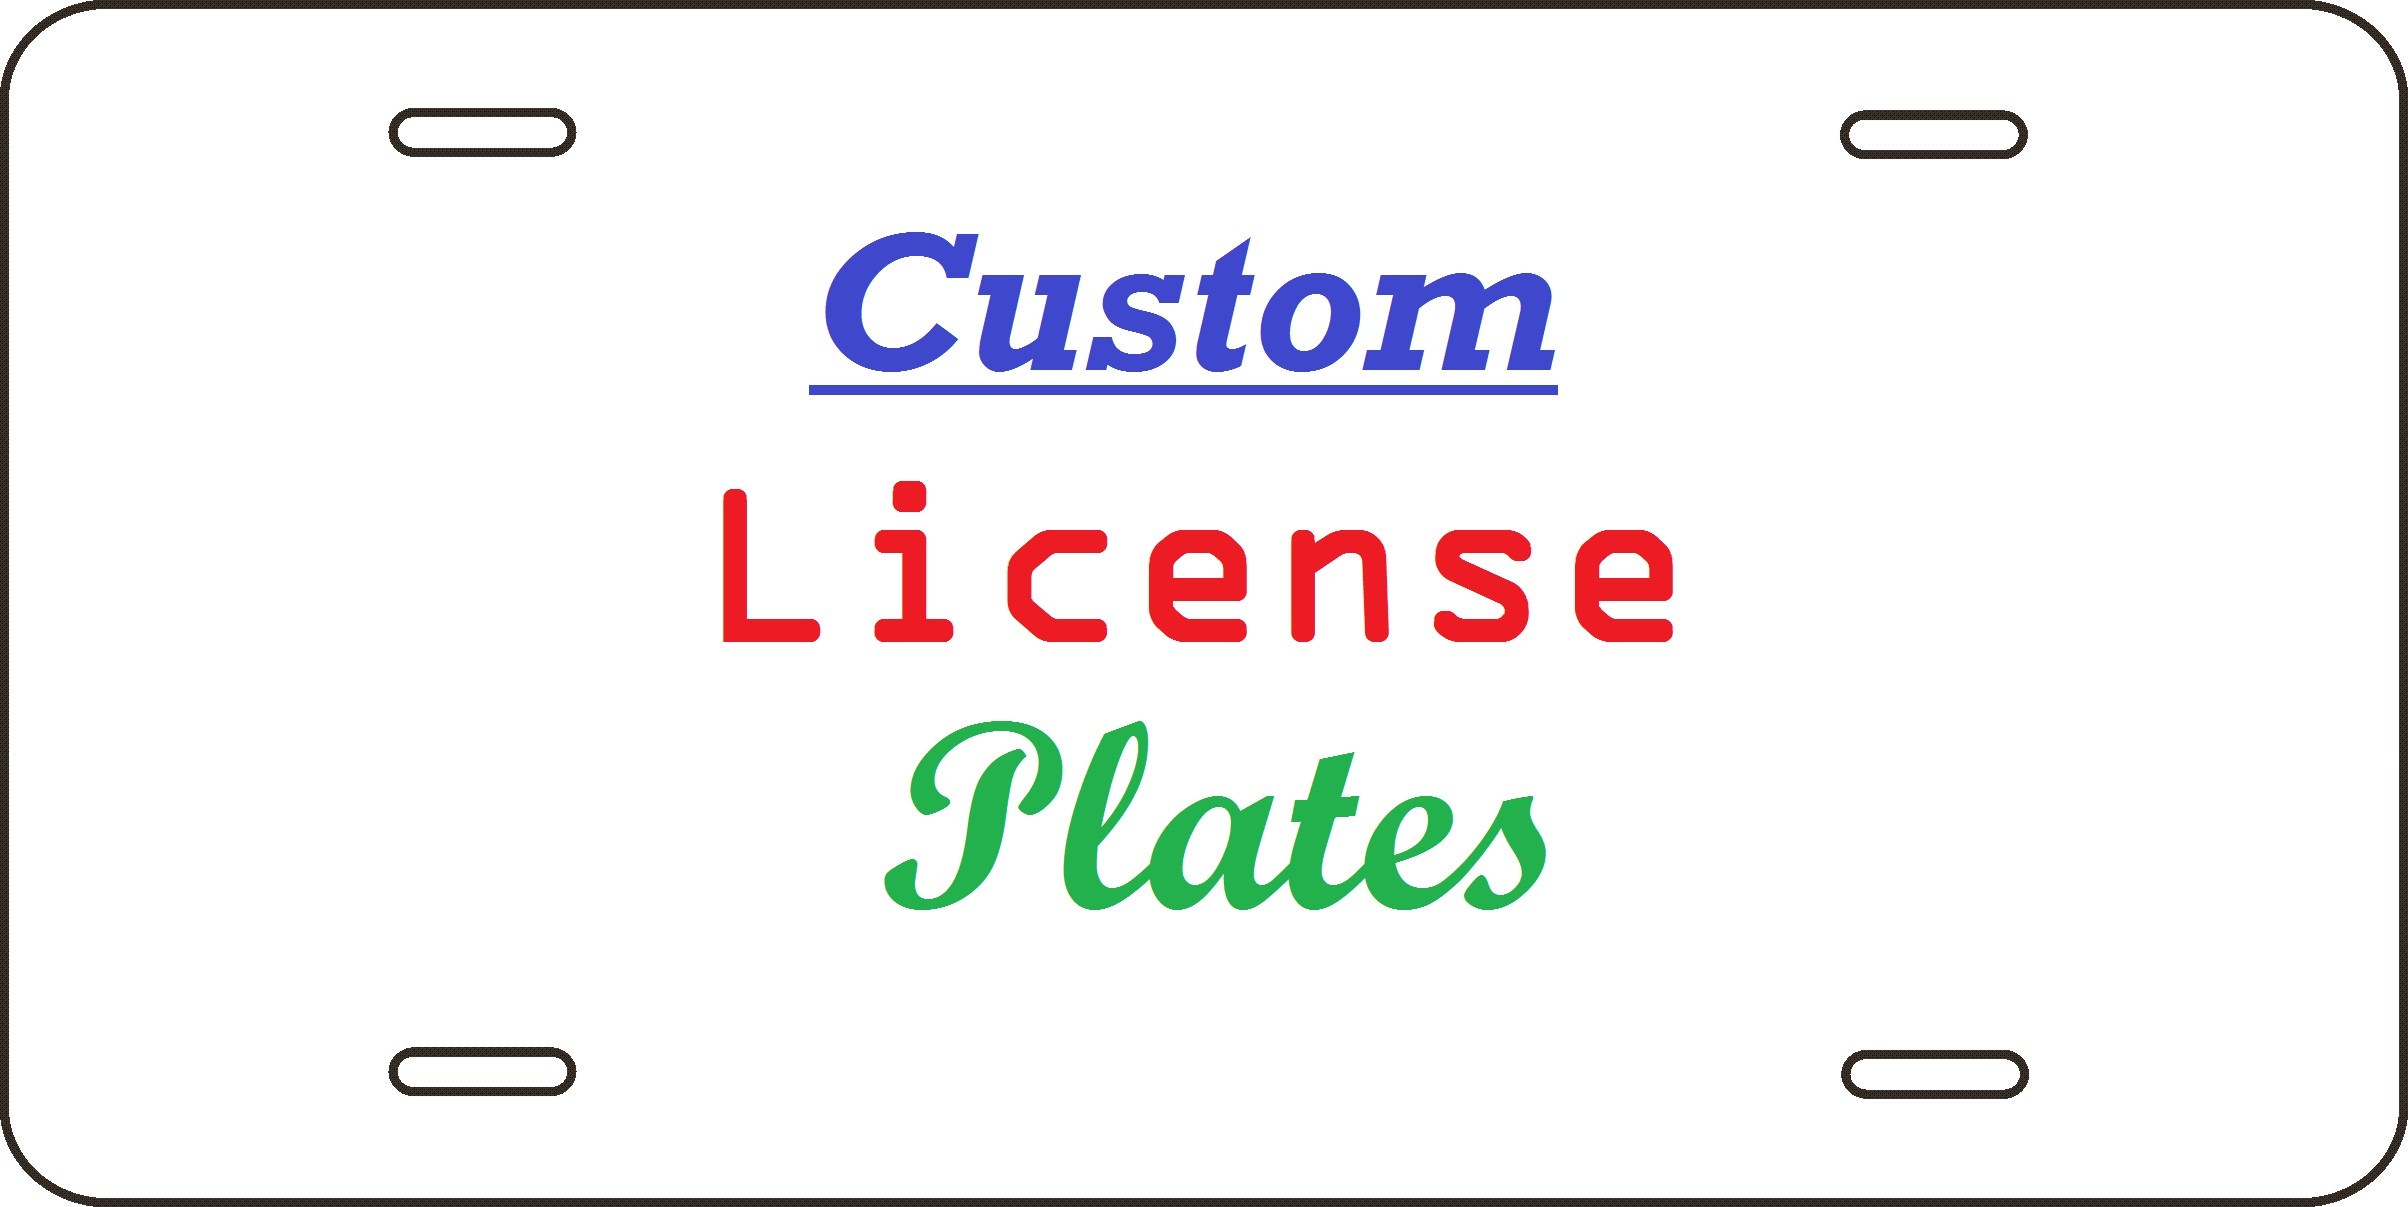 Editable License Plate Template